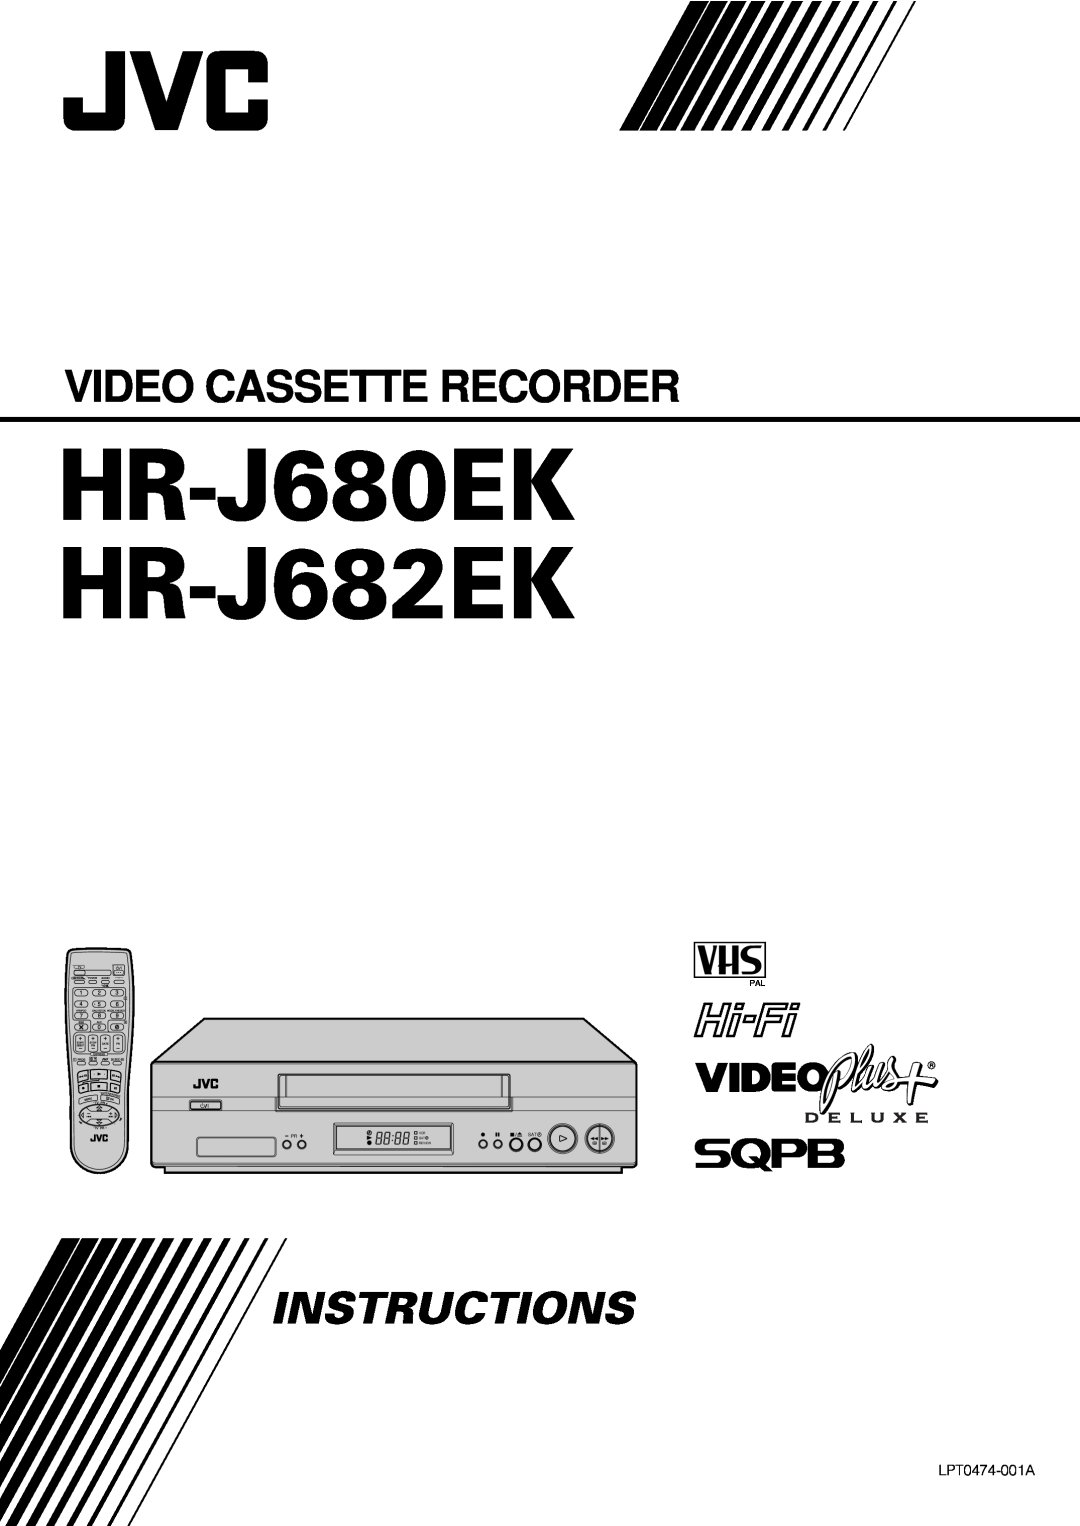 JVC manual HR-J680EK HR-J682EK, Video Cassette Recorder, Instructions, LPT0474-001A 